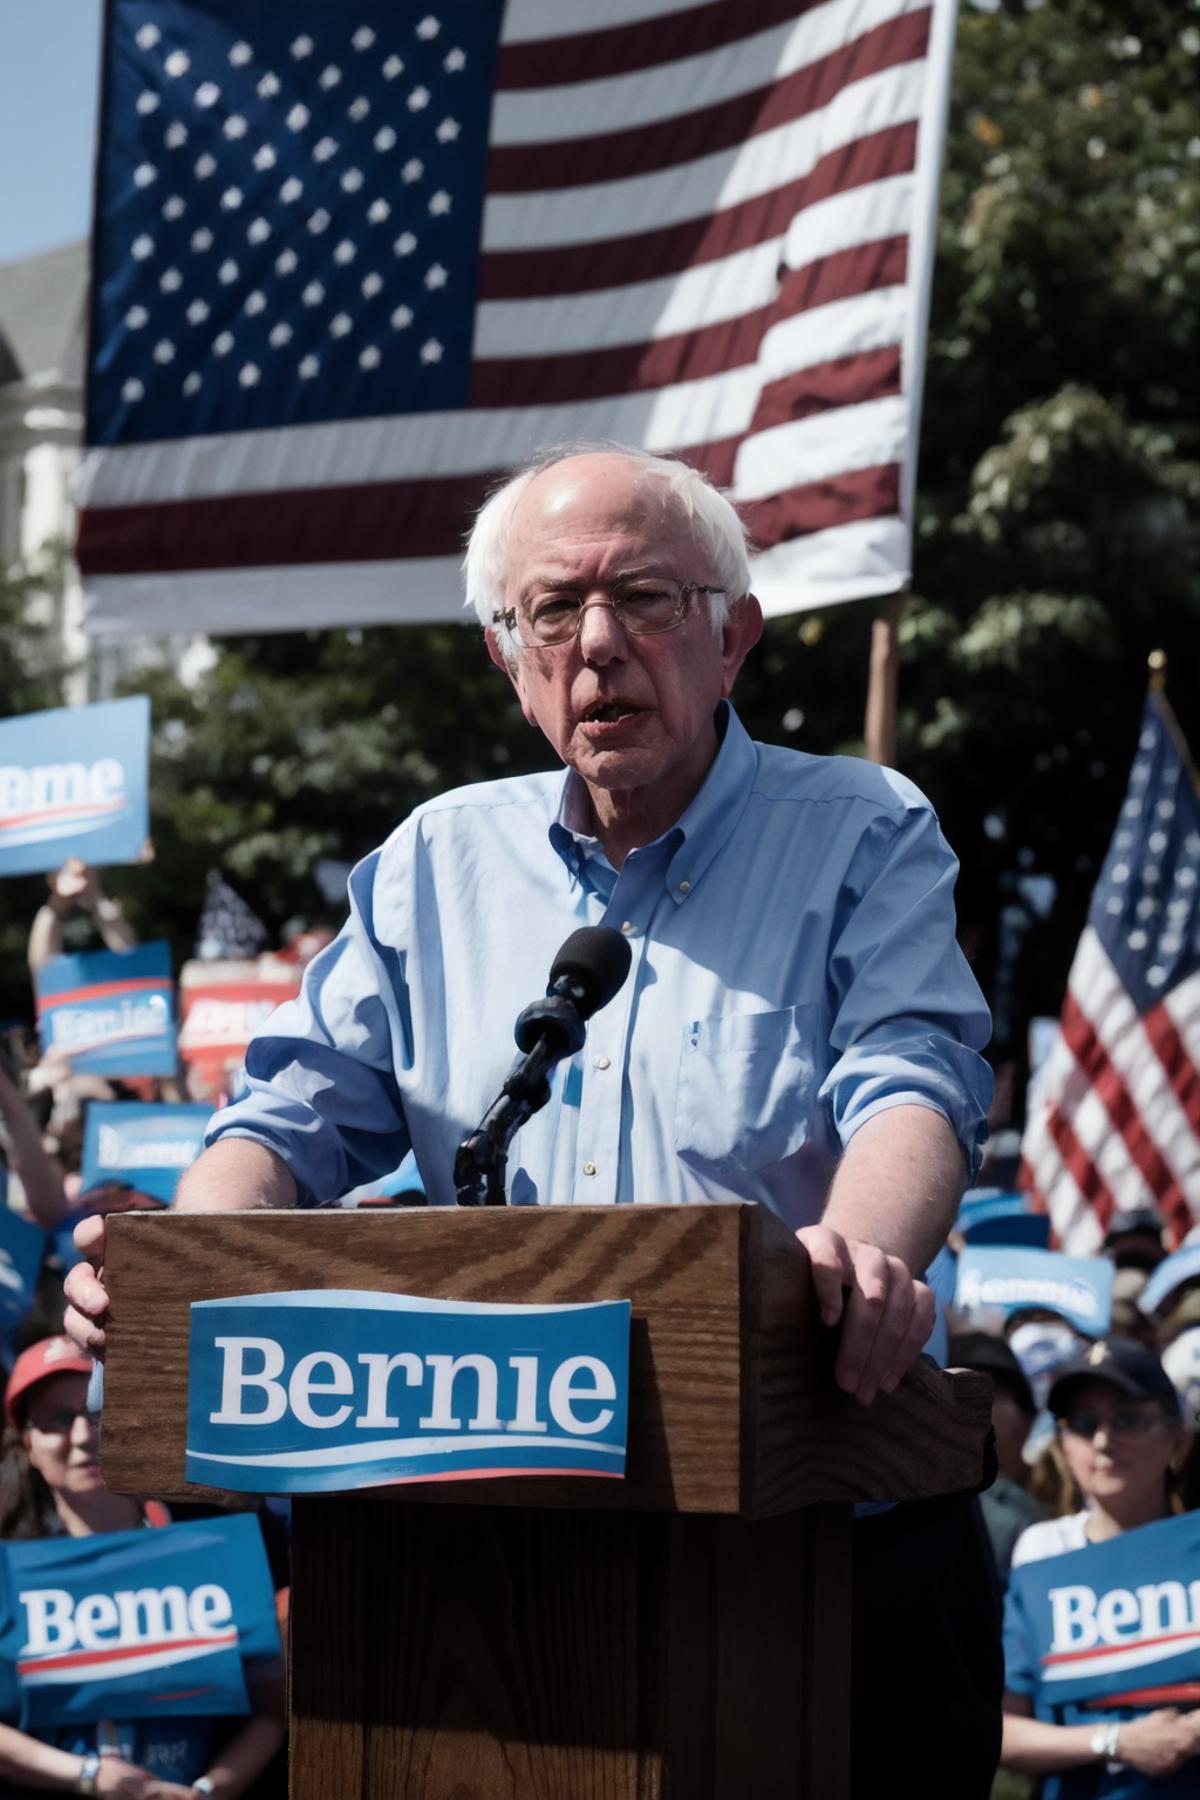 Bernie Sanders - USA | Politician image by IndolentCat